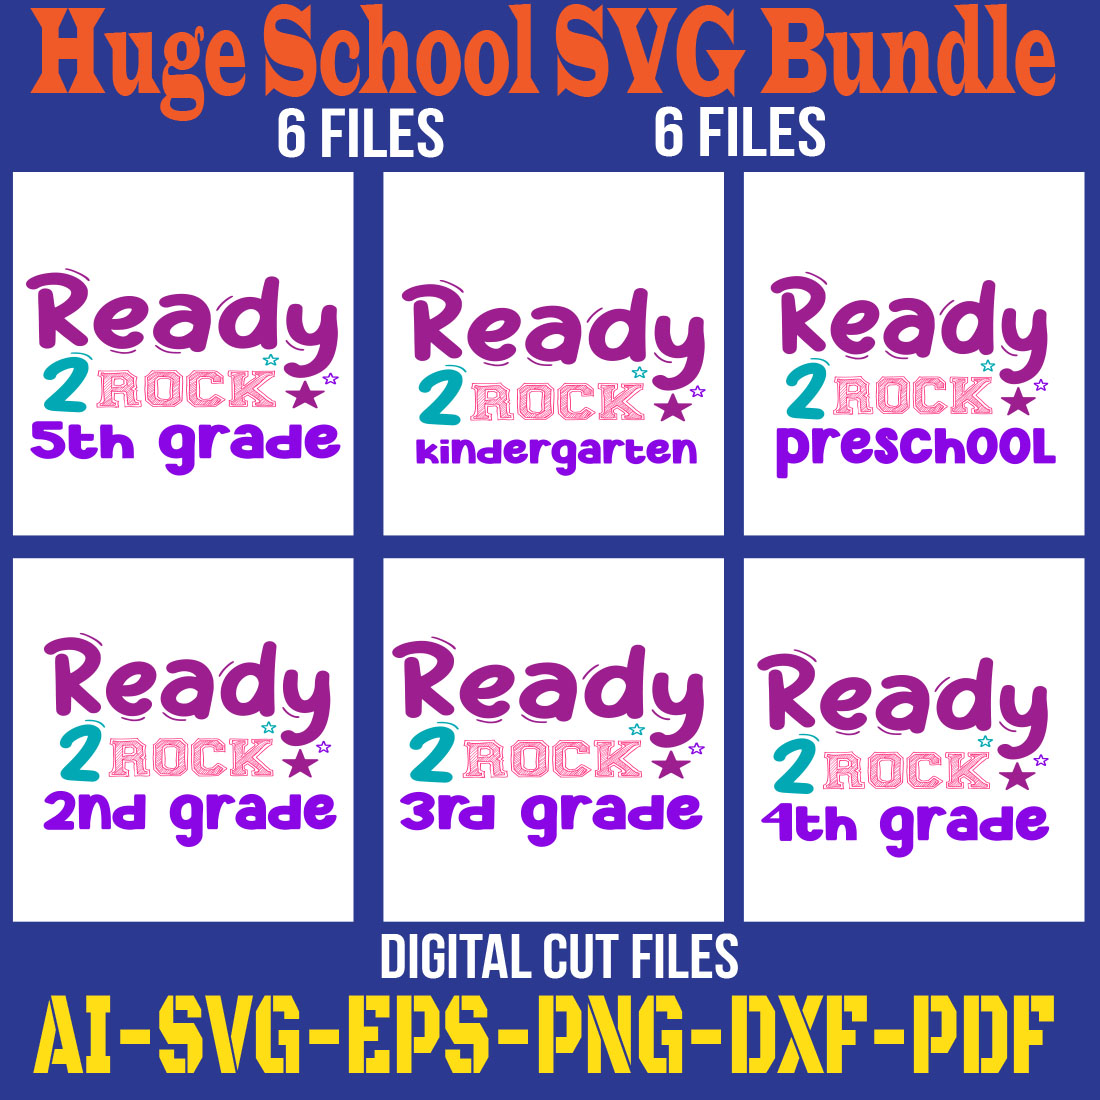 School SVG Bundle cover image.